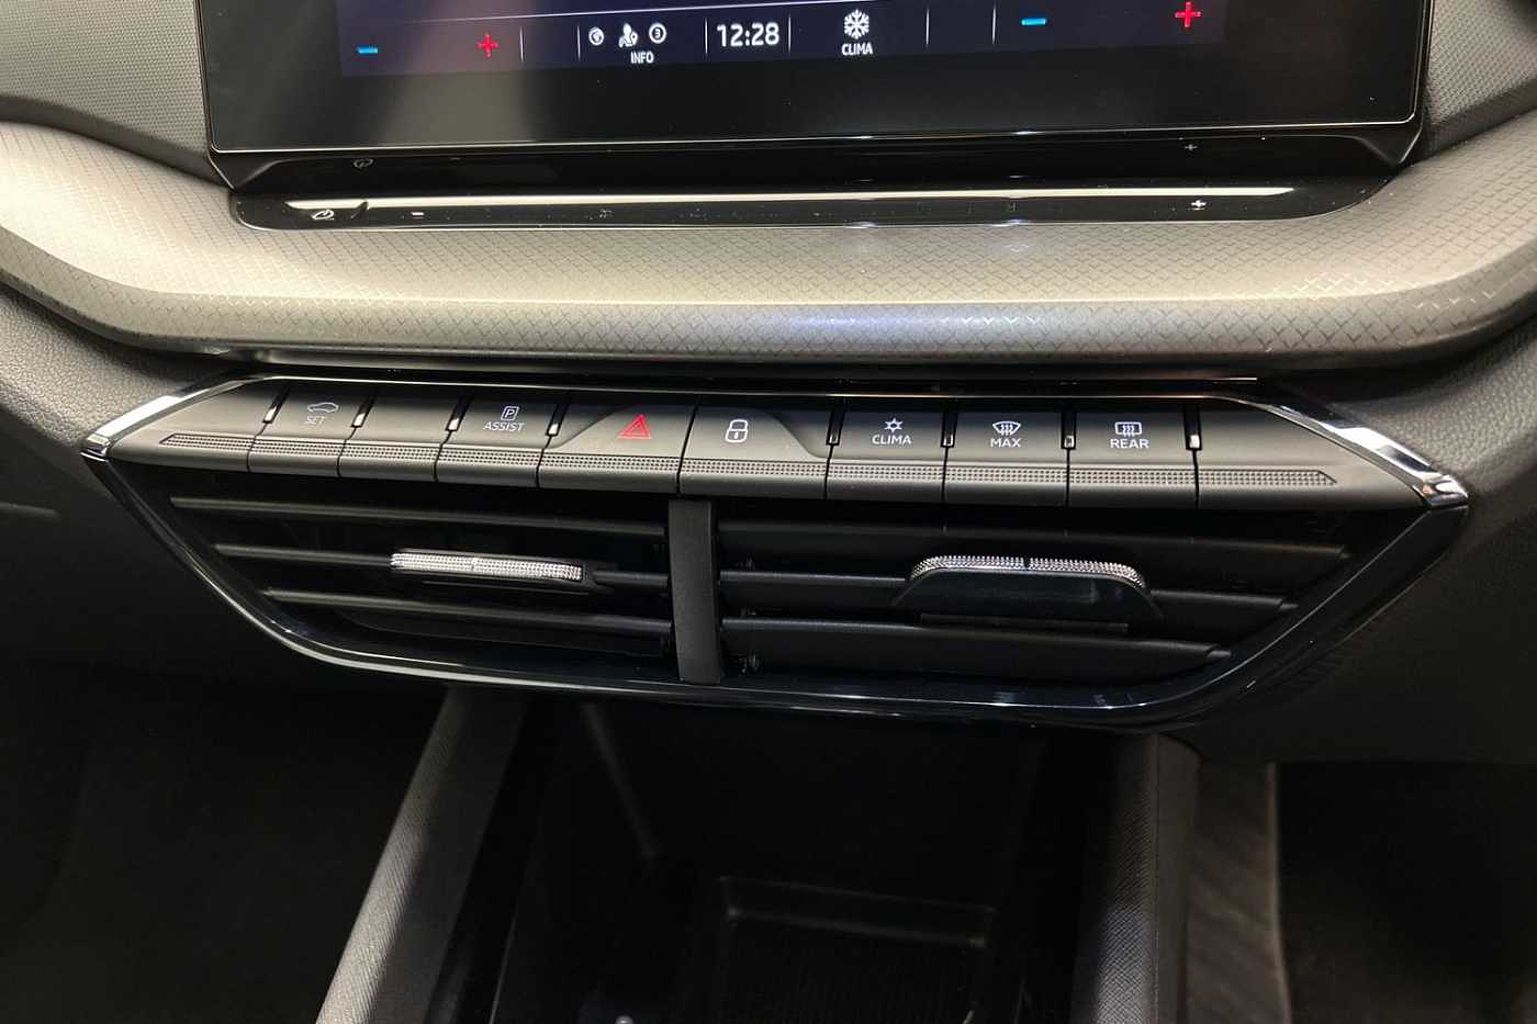 SKODA Octavia 1.0 TSI e-TEC (110ps) SE Technology Auto/DSG Hatchback